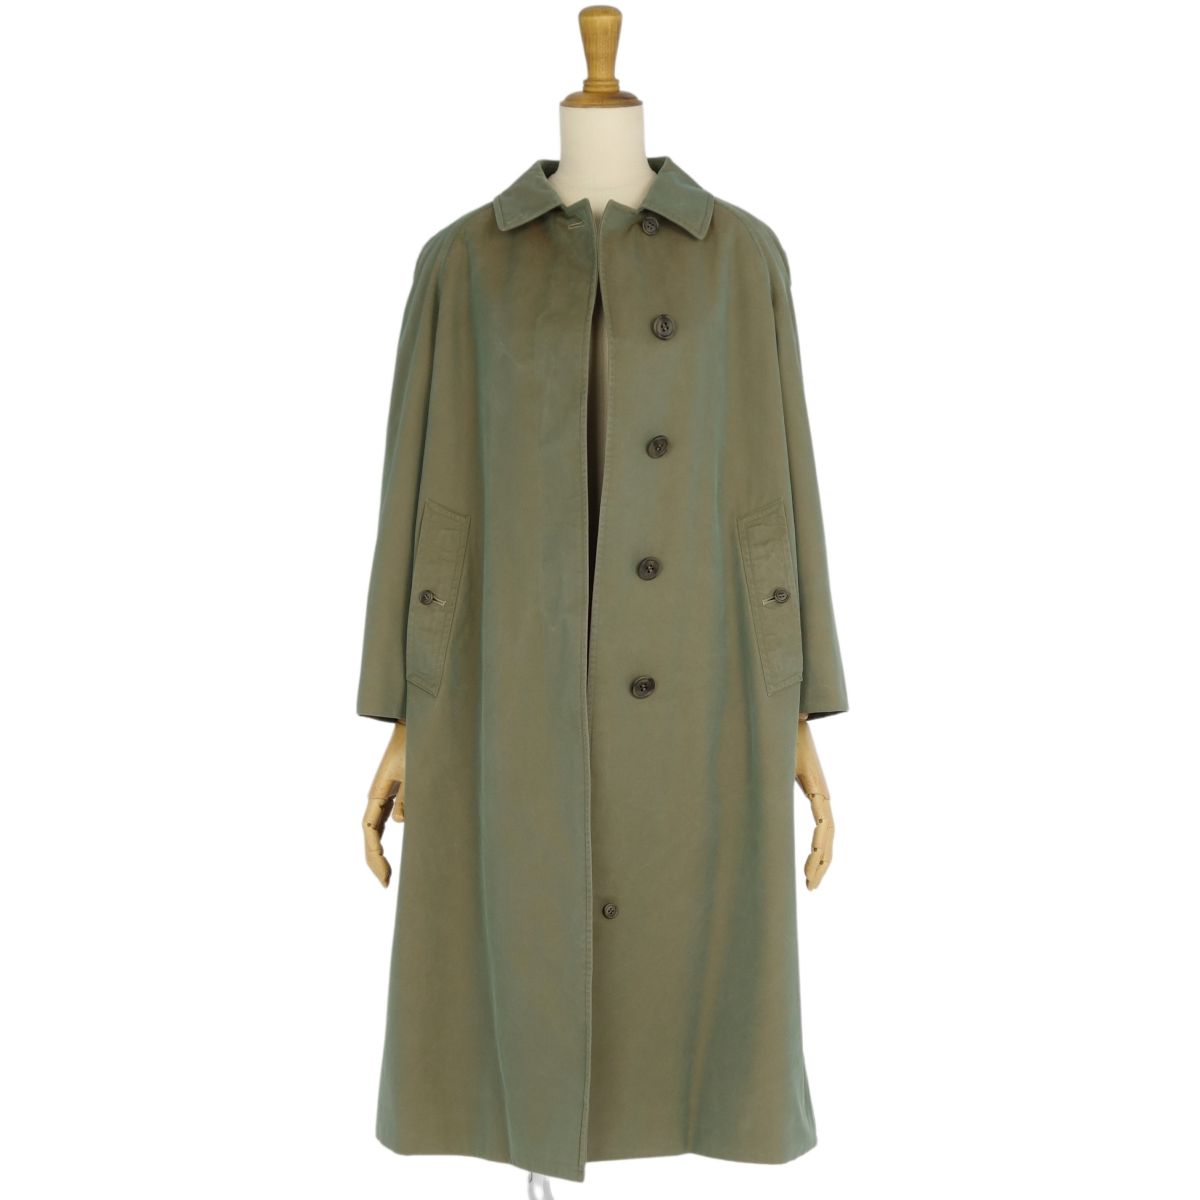 Vint Burberry s Coat  Coat Burberry Coat Back Check Out  S Equivalent Olive Coat